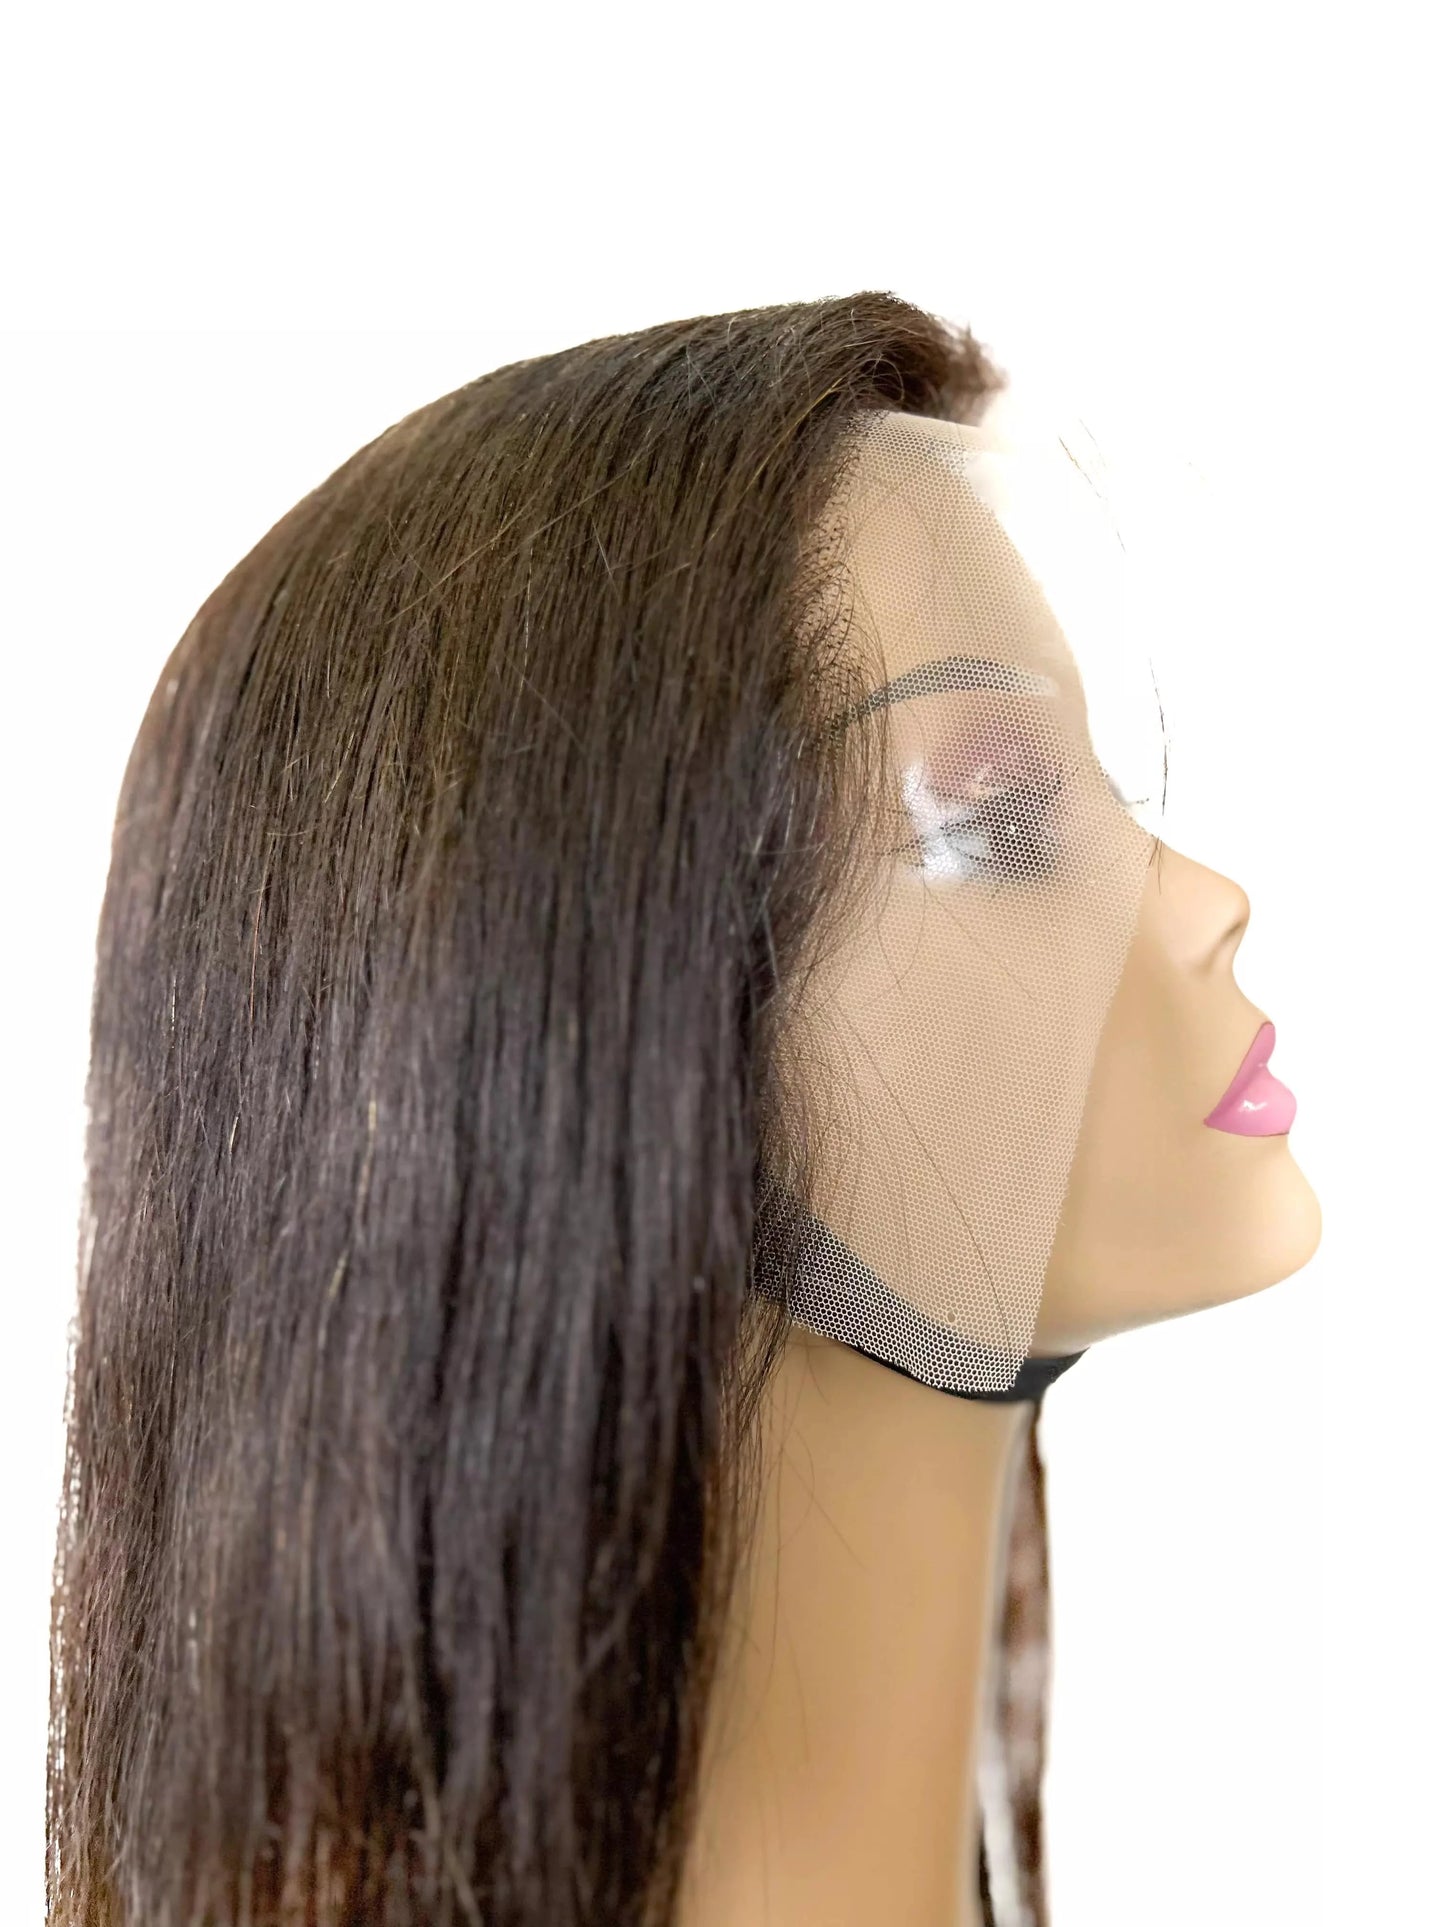 Azalea Brazilian Human Hair Wigs Rated-25A